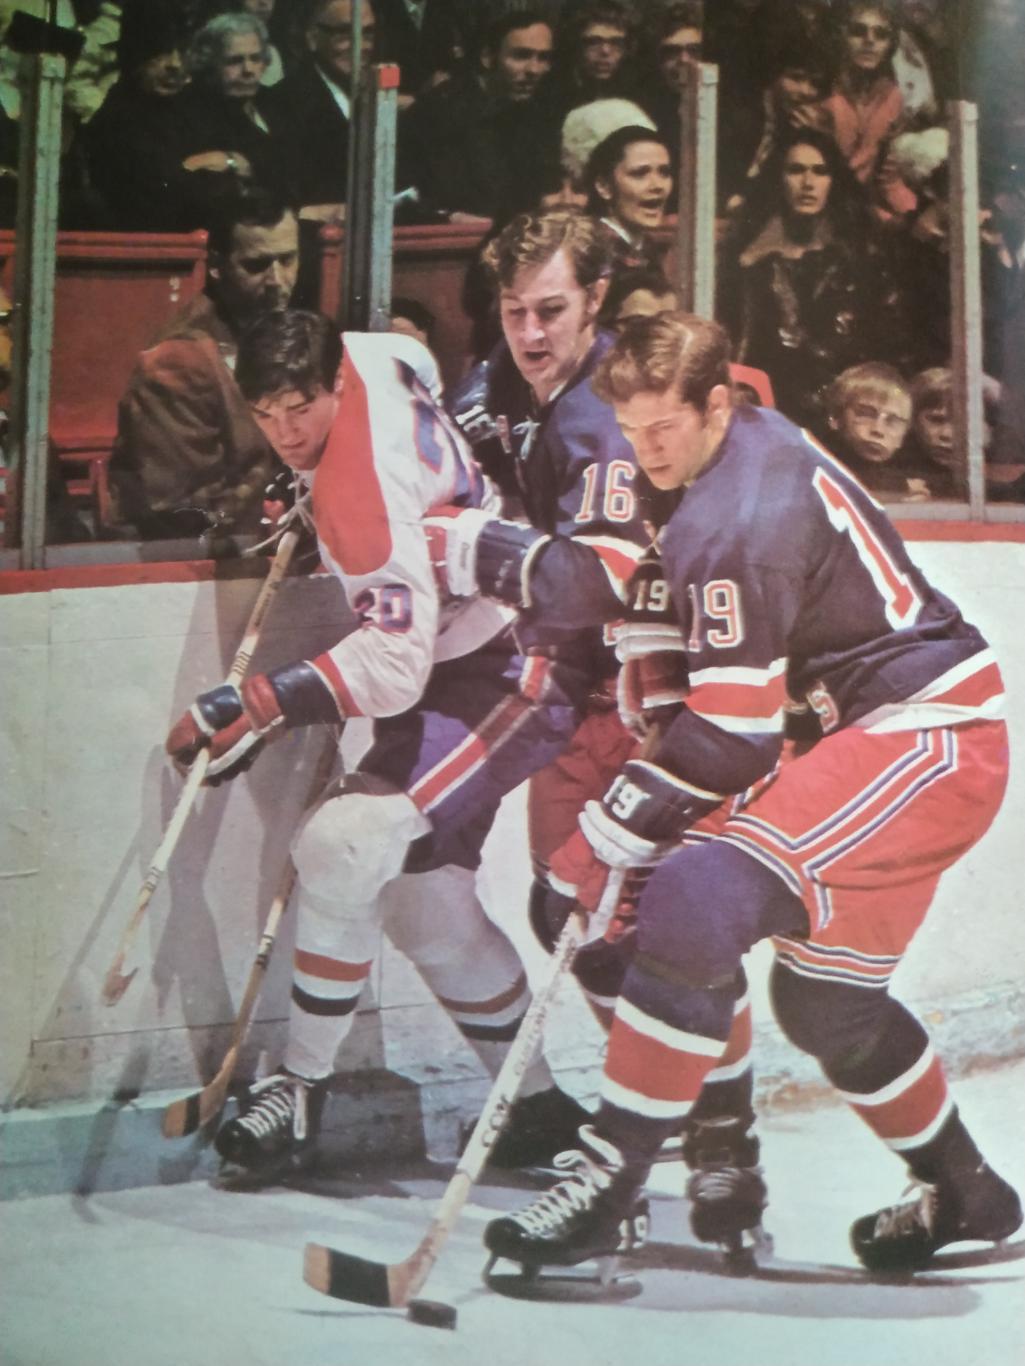 ХОККЕЙ ПРОГРАММА МАТЧА НХЛ NHL 1972 FEB.22 NEW YORK VS. CANADIENS PROGRAM GAME 4